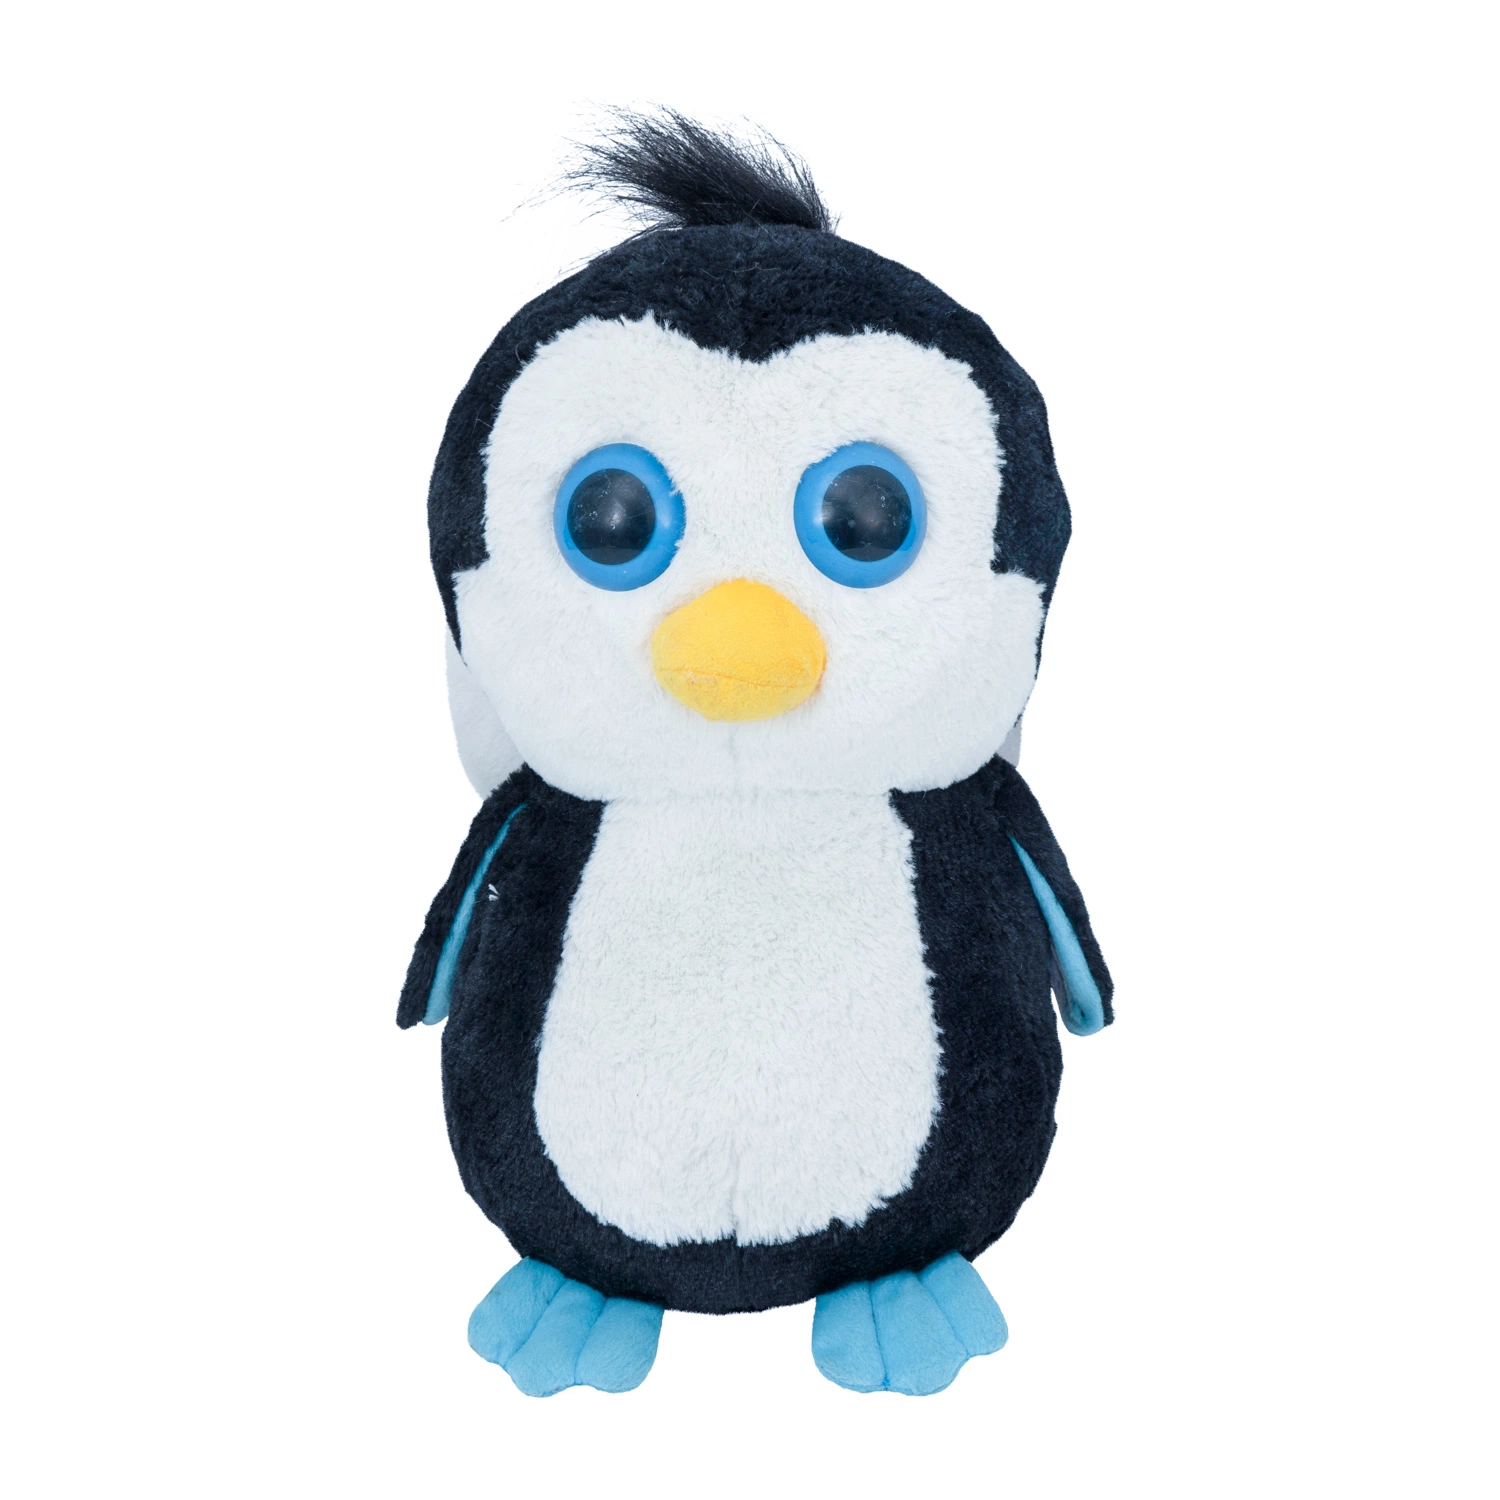 Soft Plush Stuffed Plush Baby Toy Cute Penguin